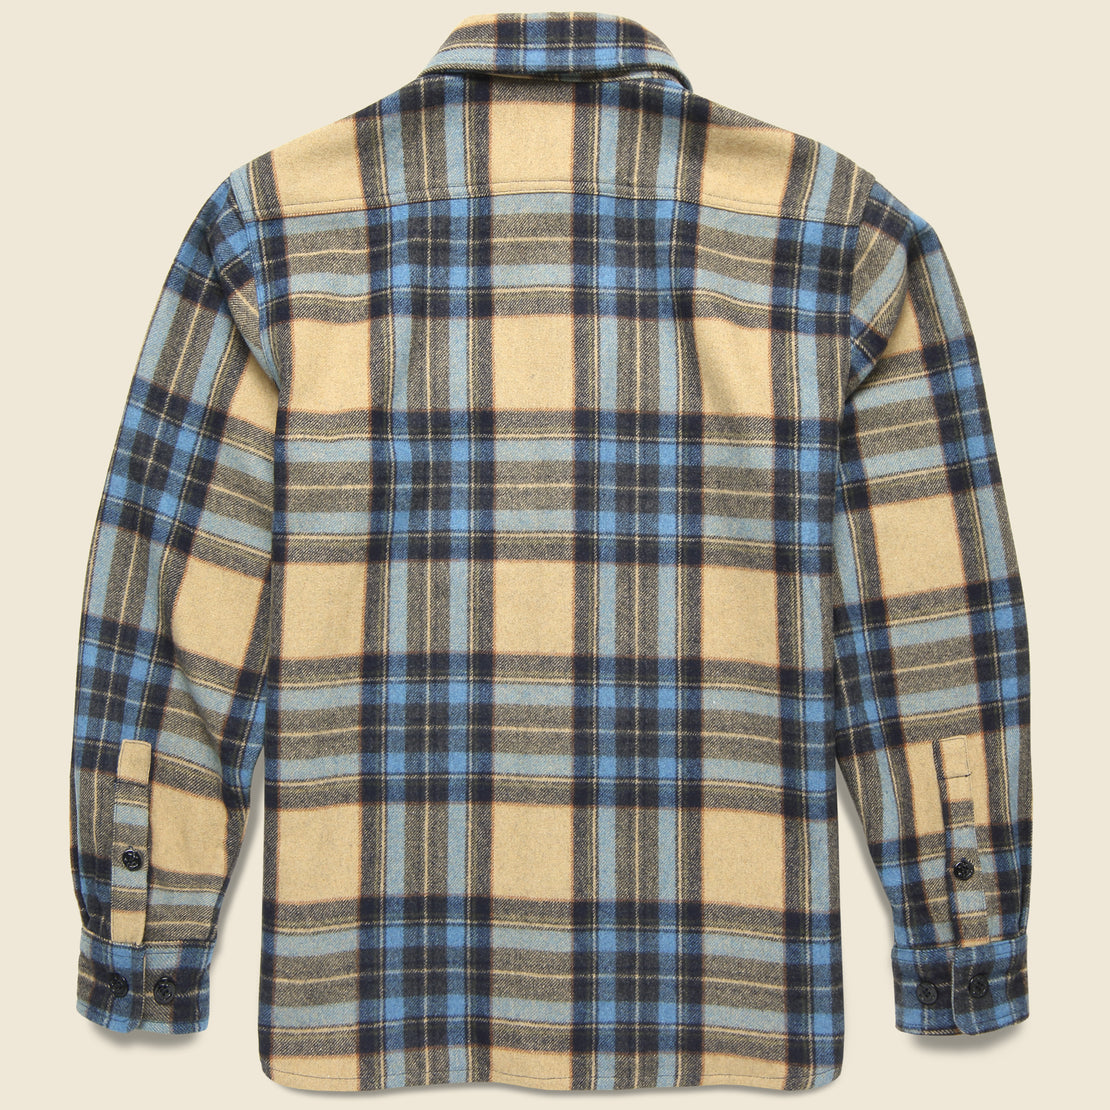 CPO Wool Shirt - Blue/Tan Plaid - Schott - STAG Provisions - Tops - L/S Woven - Overshirt